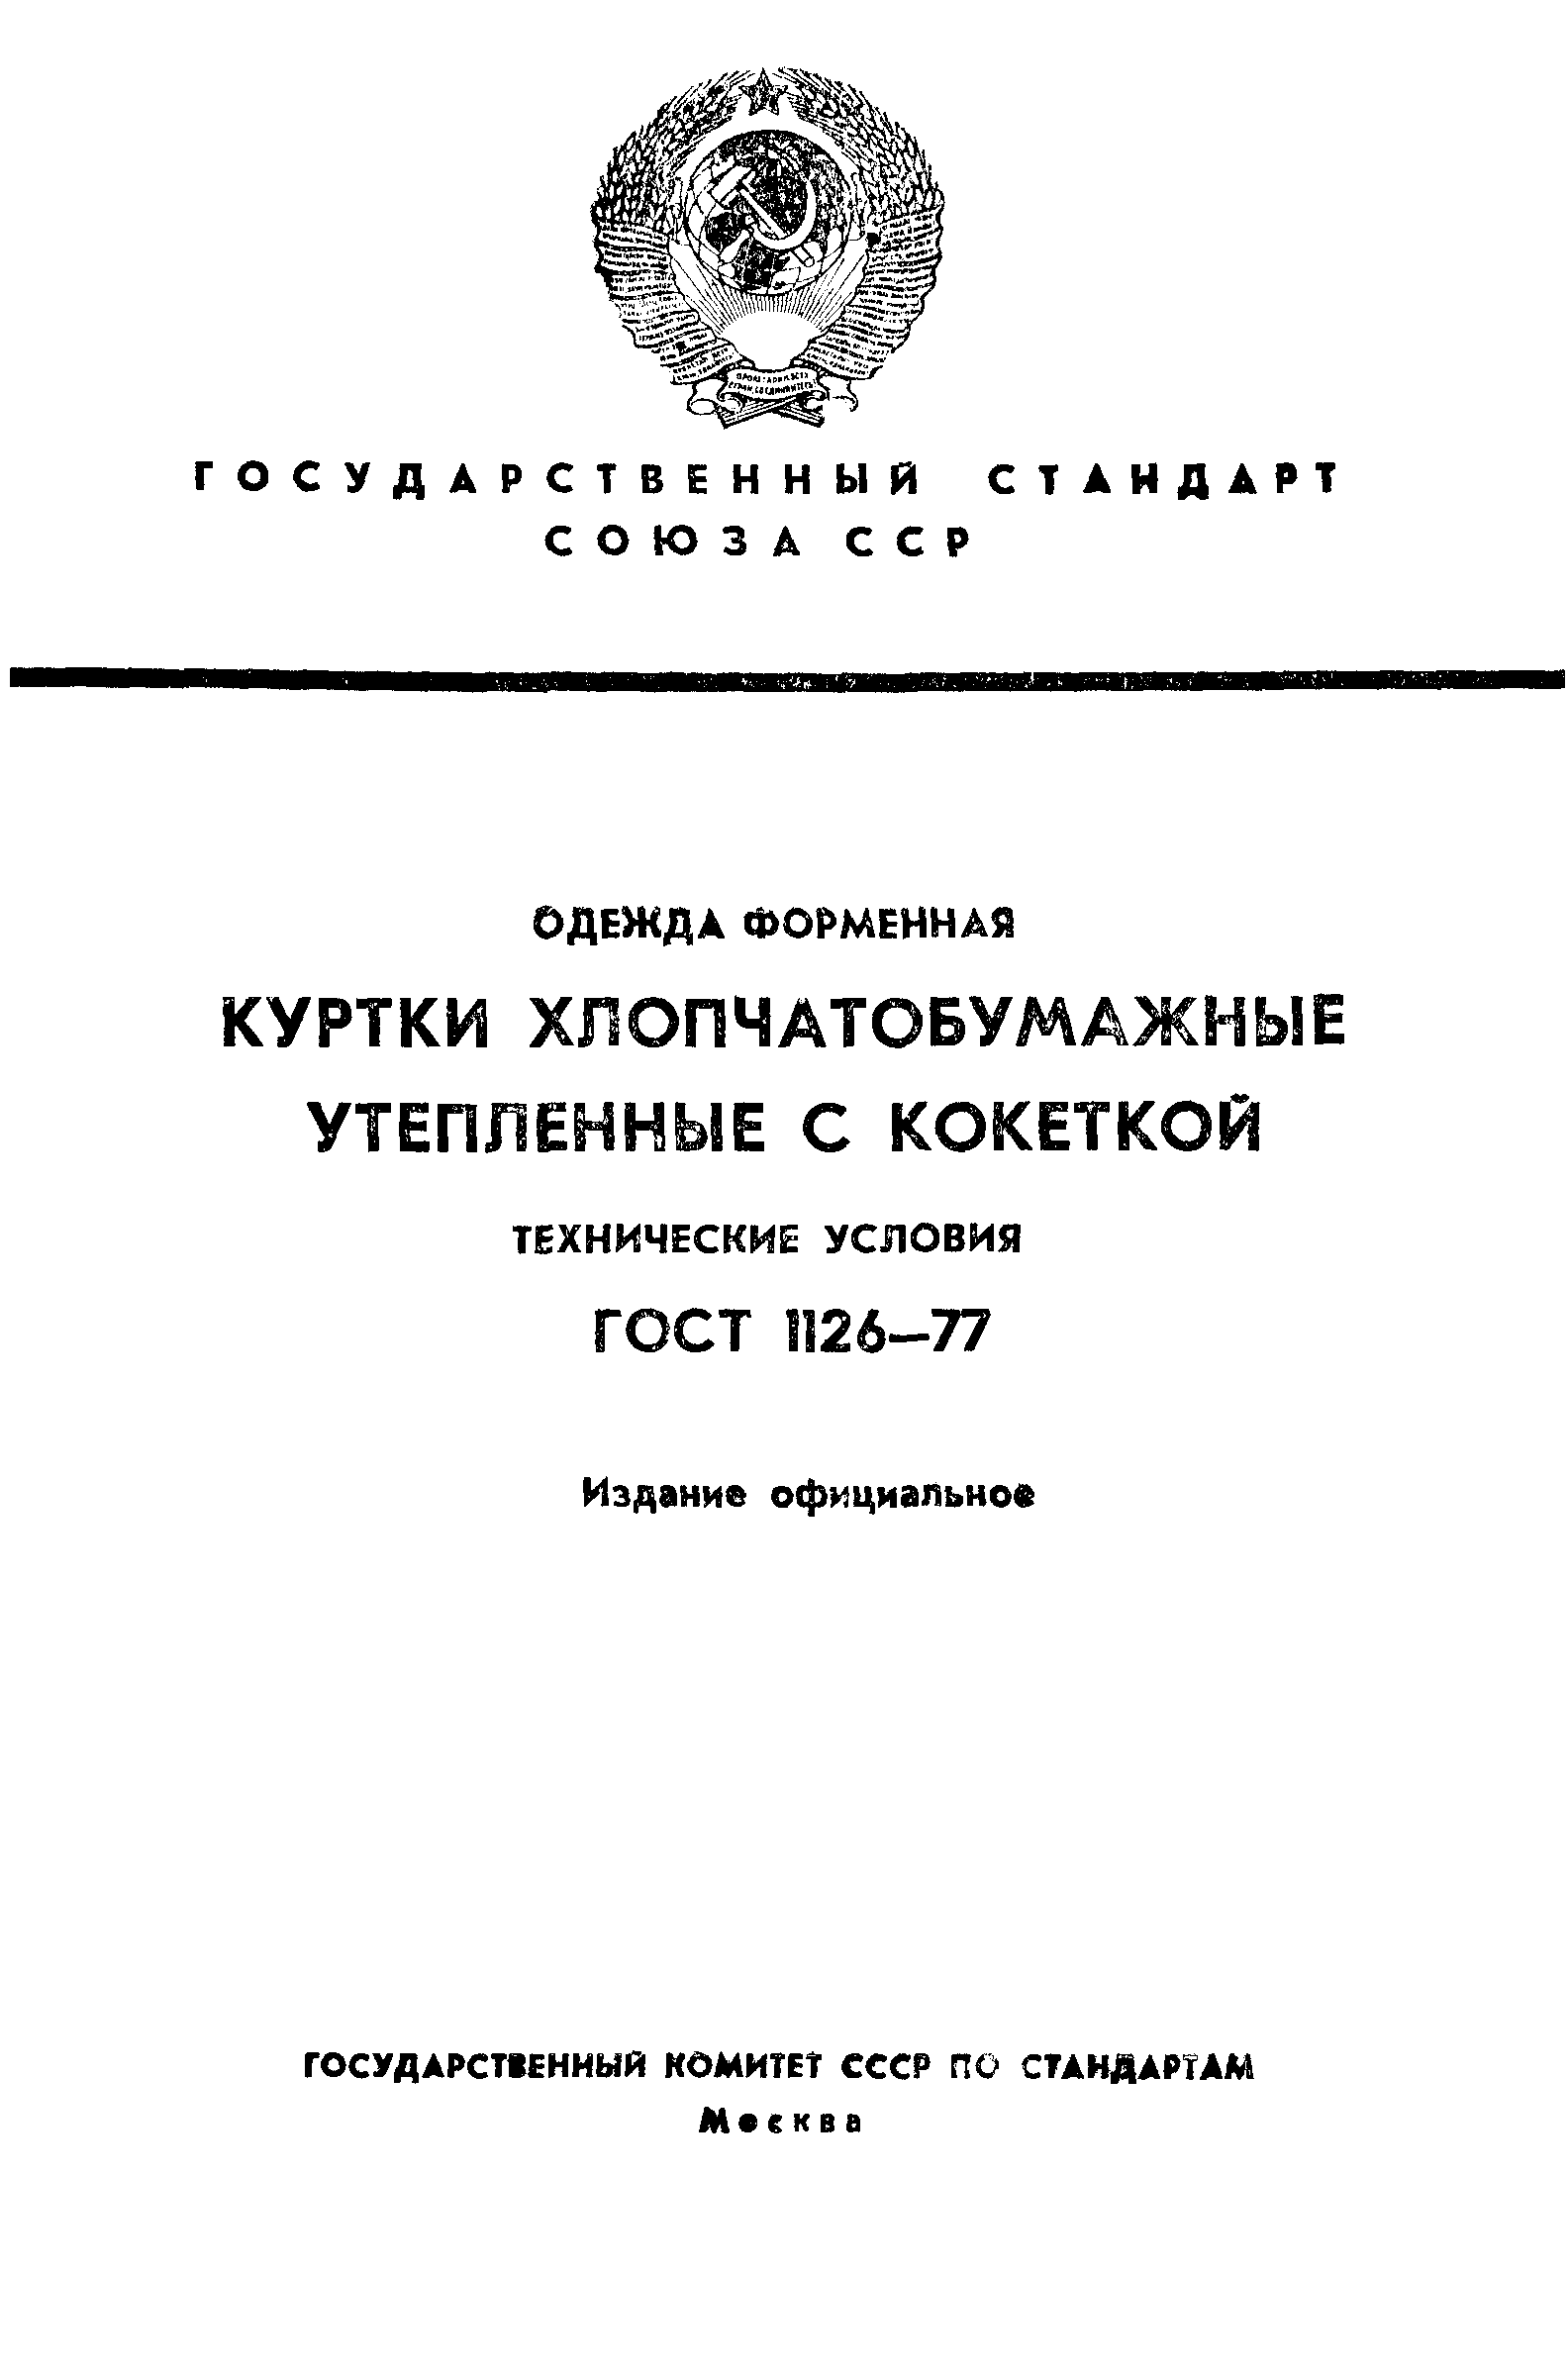 ГОСТ 1126-77